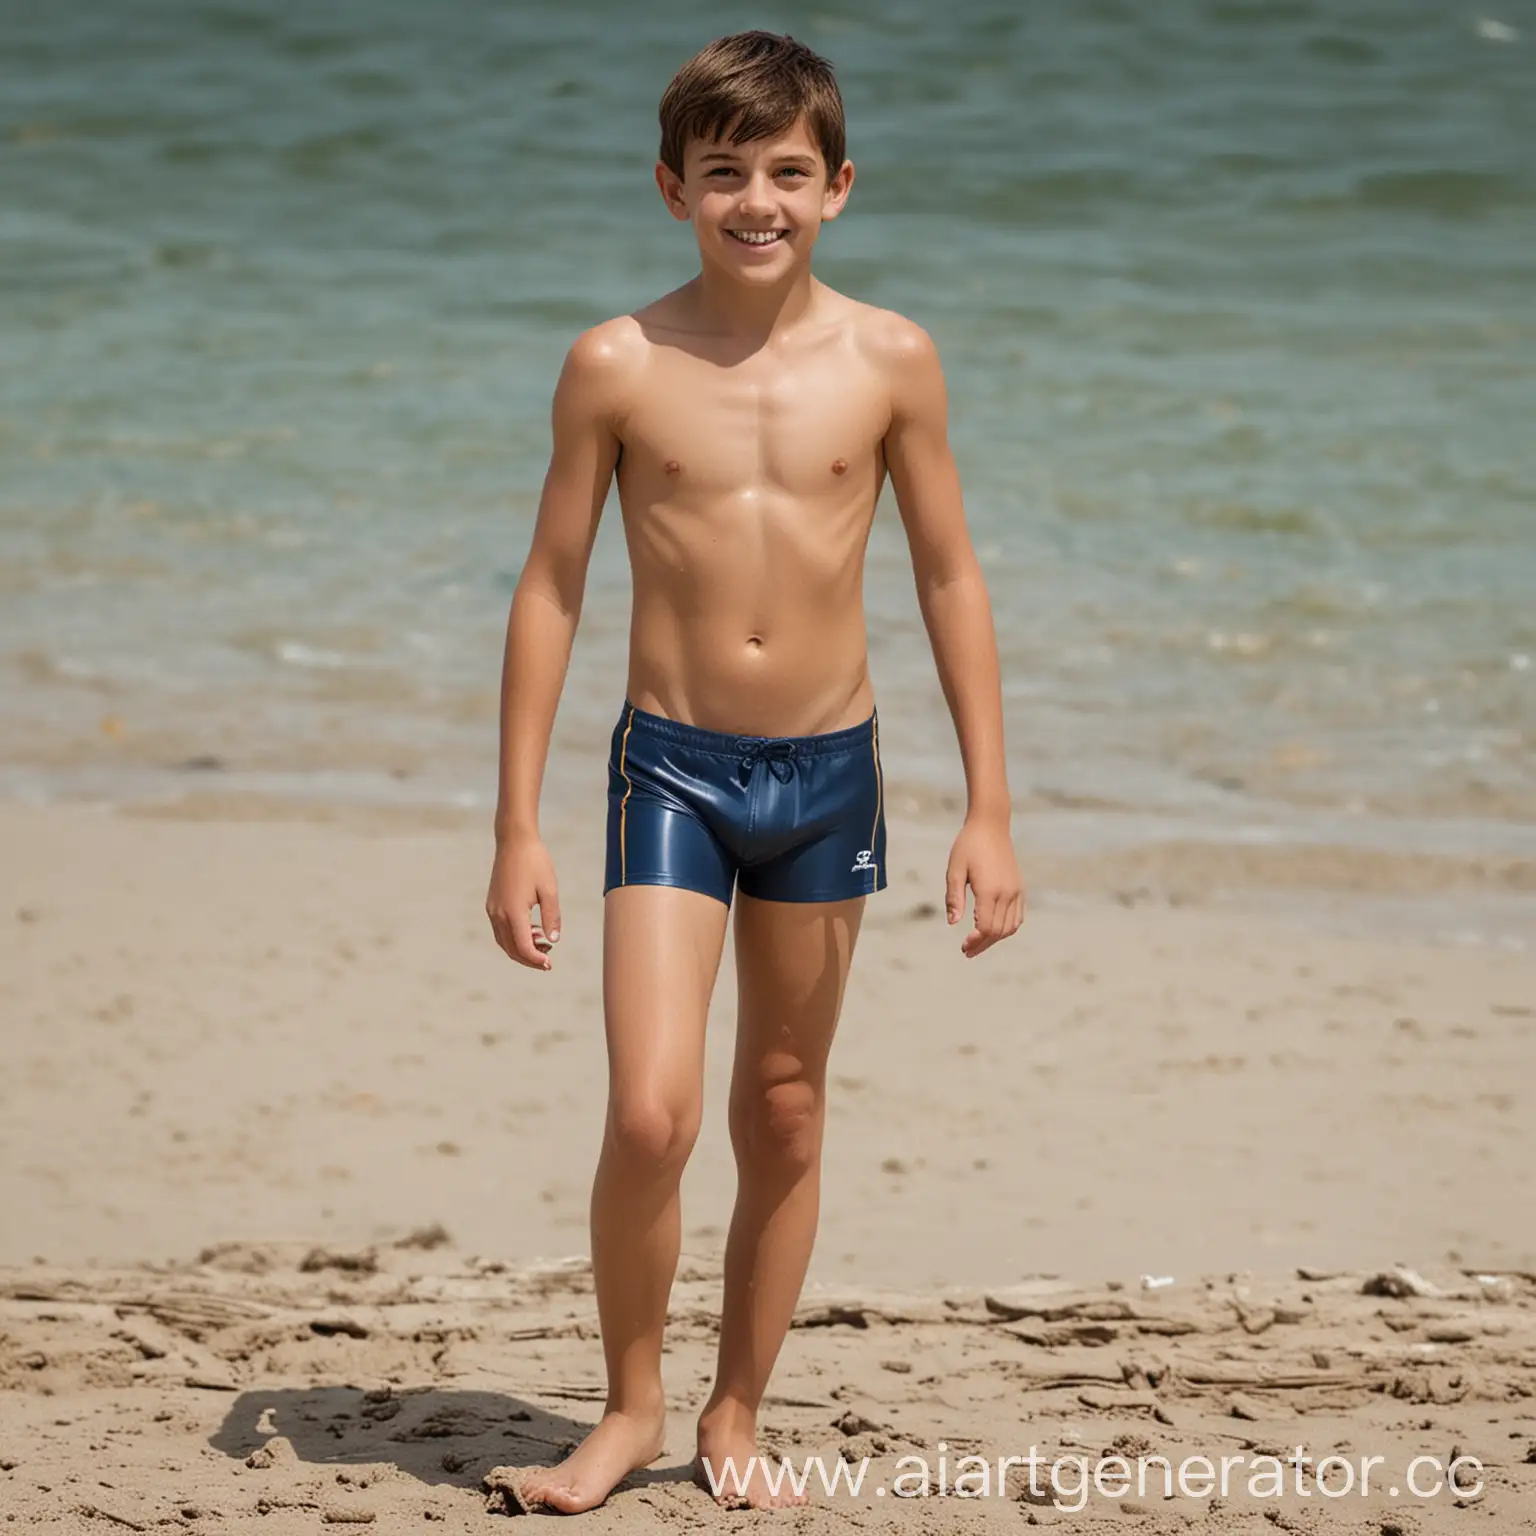 Preteen-Boy-in-Speedo-with-Muscular-Legs-at-the-Beach